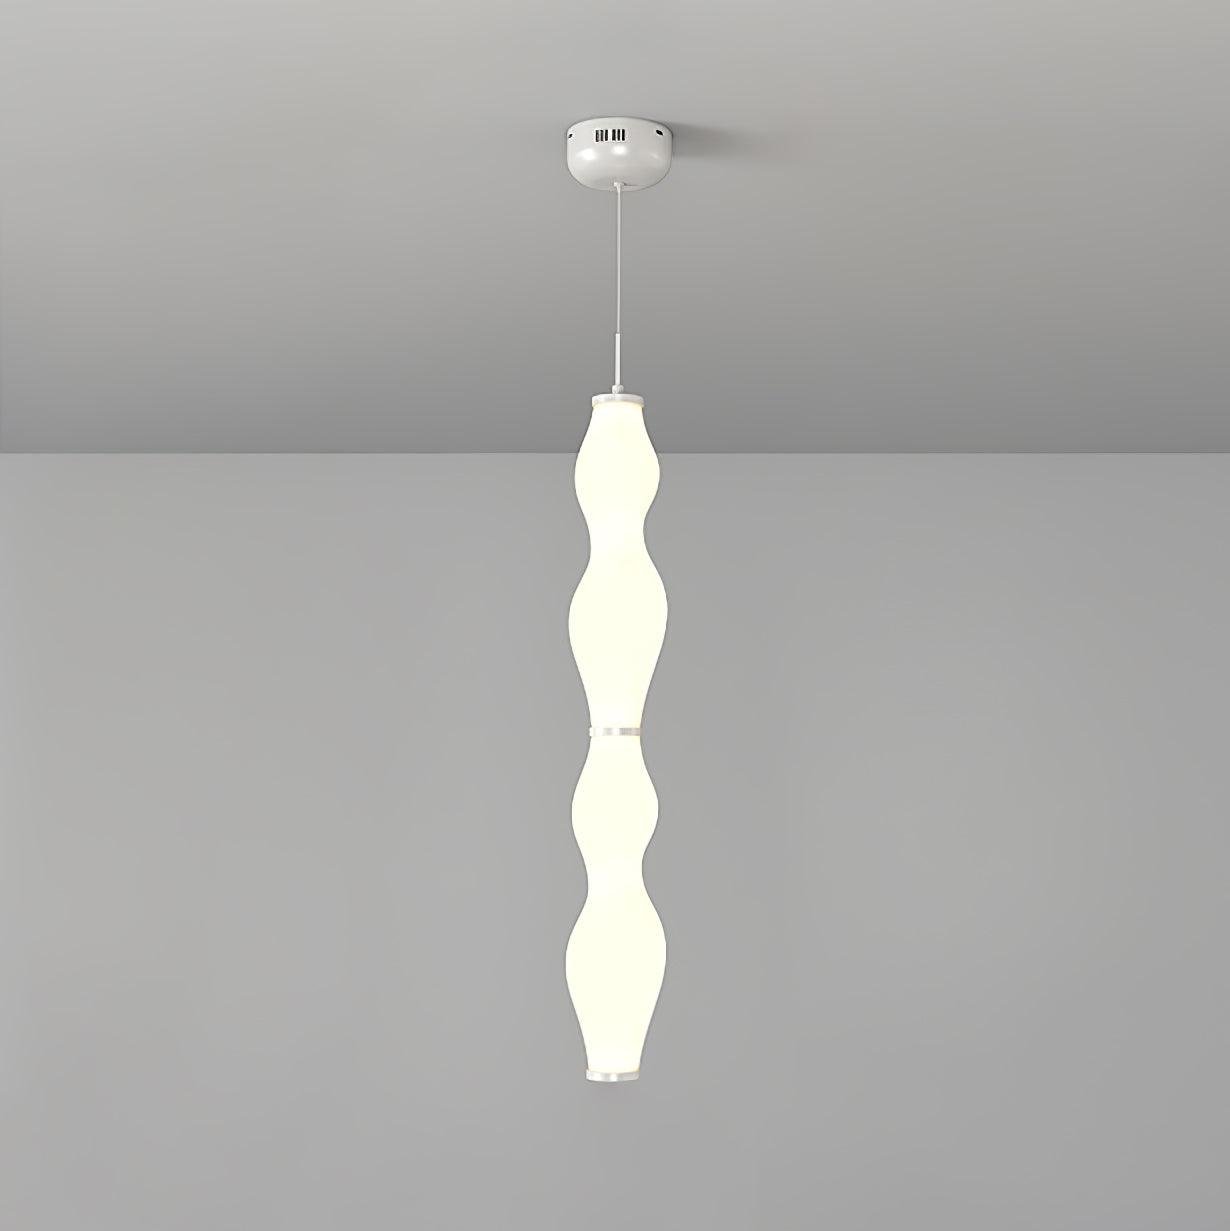 White Empirico Pendant Lamp: 6.3-inch Diameter, 39.4-inch Height (16cm x 100cm); Emits Cool Light.